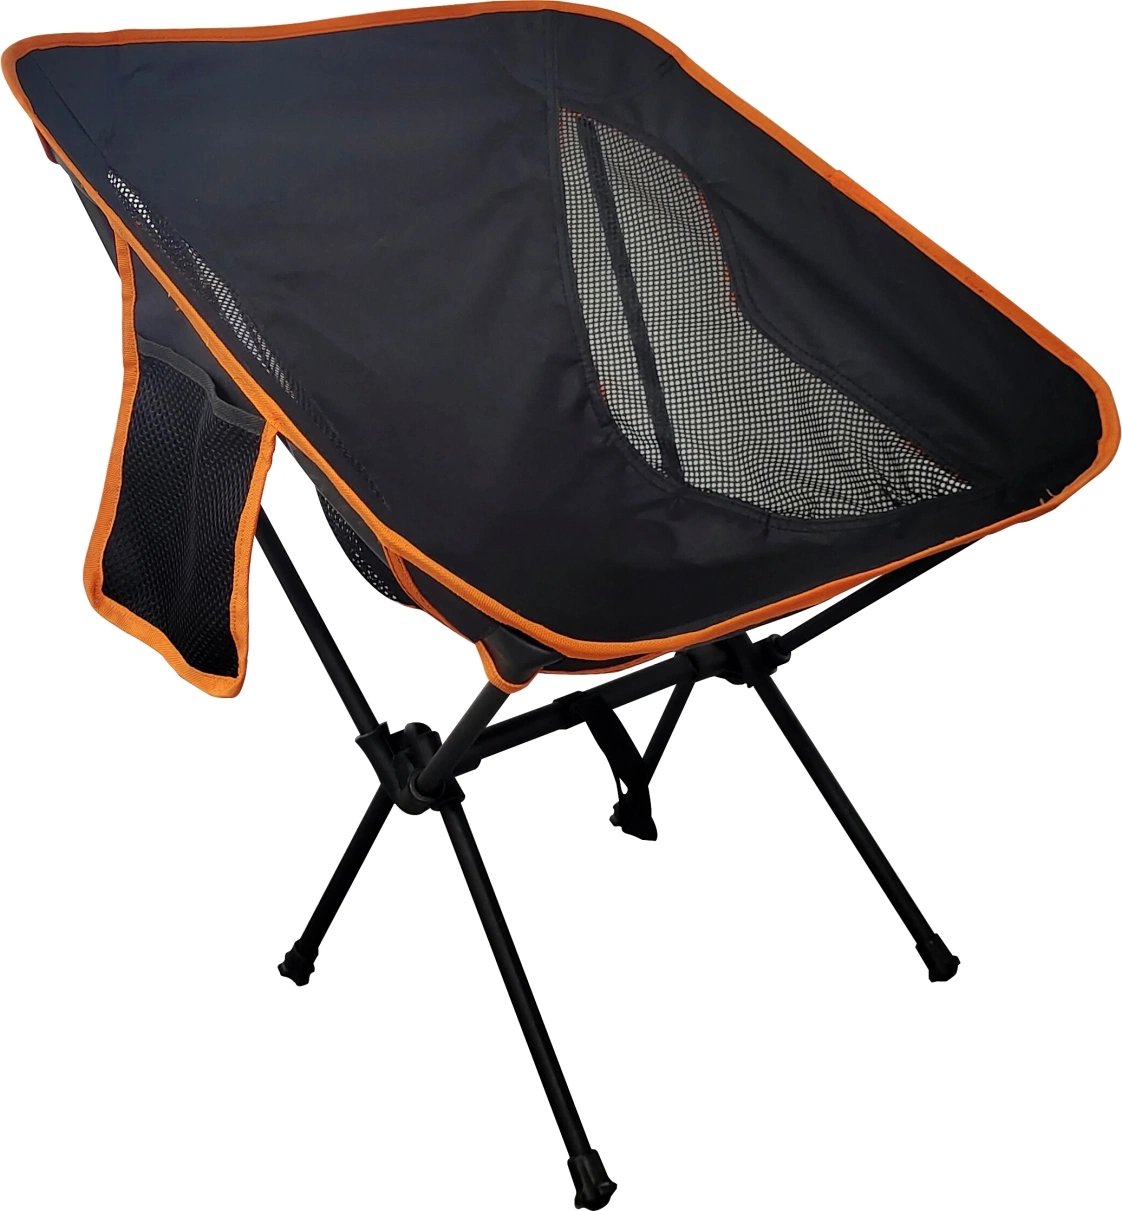 Wholesale Outdoor Garden Picnic Portable Folding Camping Space Chair Moon Beach Chair